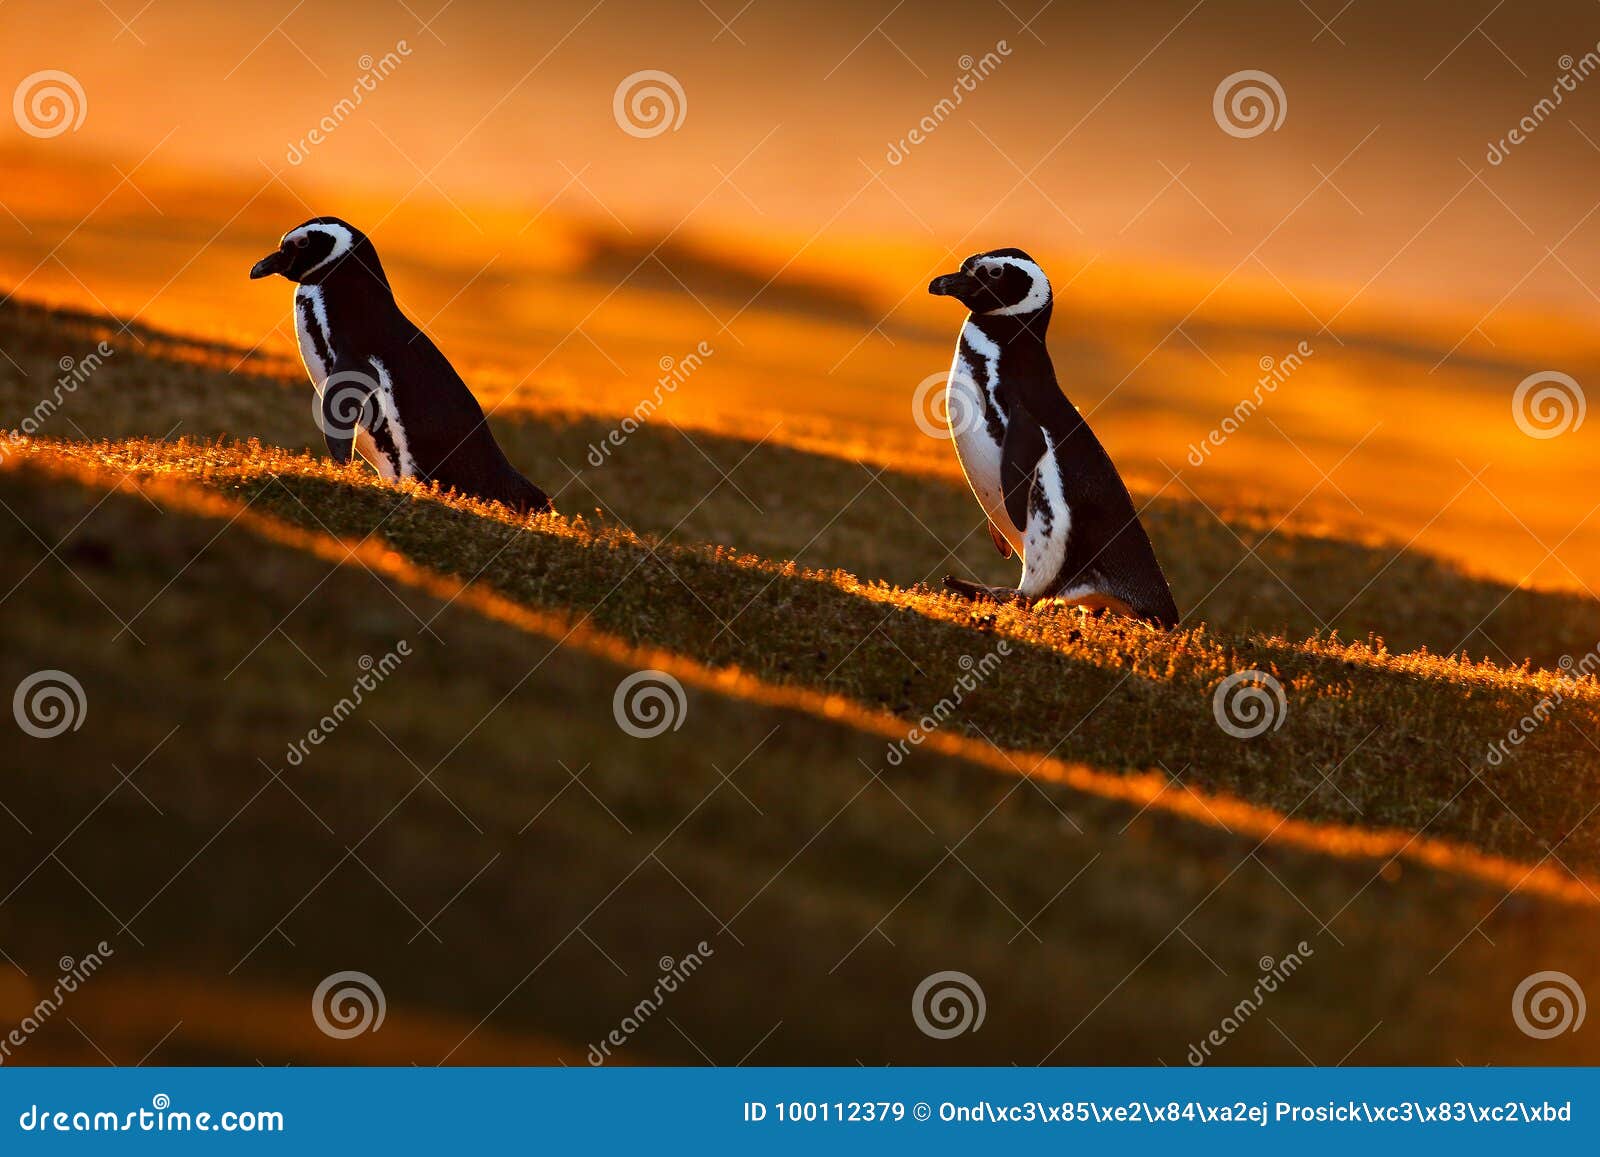 evening light with penguins. birds with orange sunset. beautiful magellan penguin with sun light. penguin with evening light. open